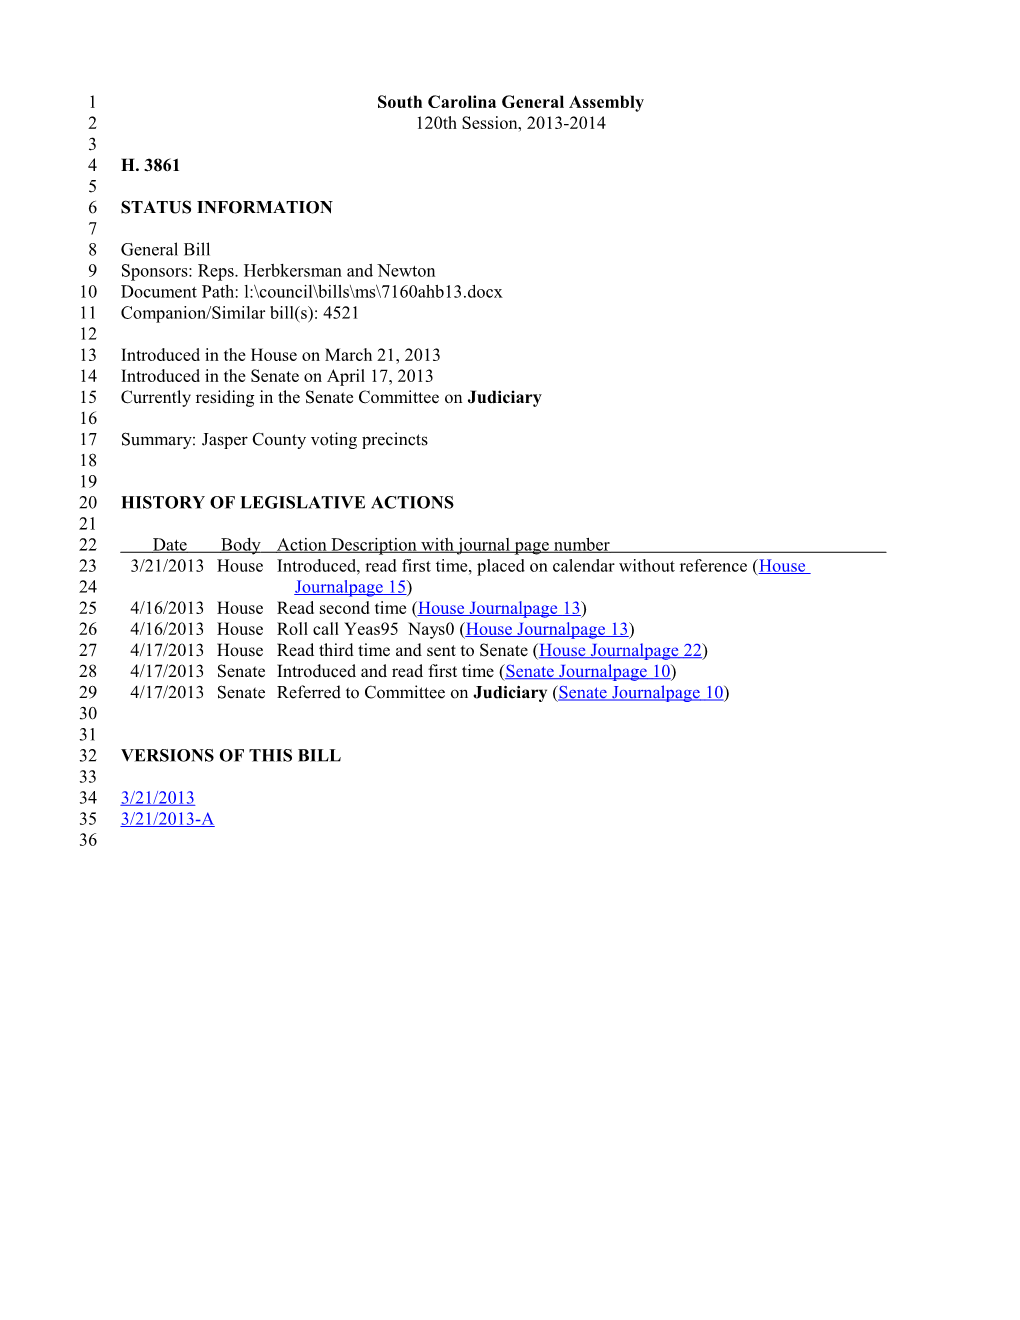 2013-2014 Bill 3861: Jasper County Voting Precincts - South Carolina Legislature Online